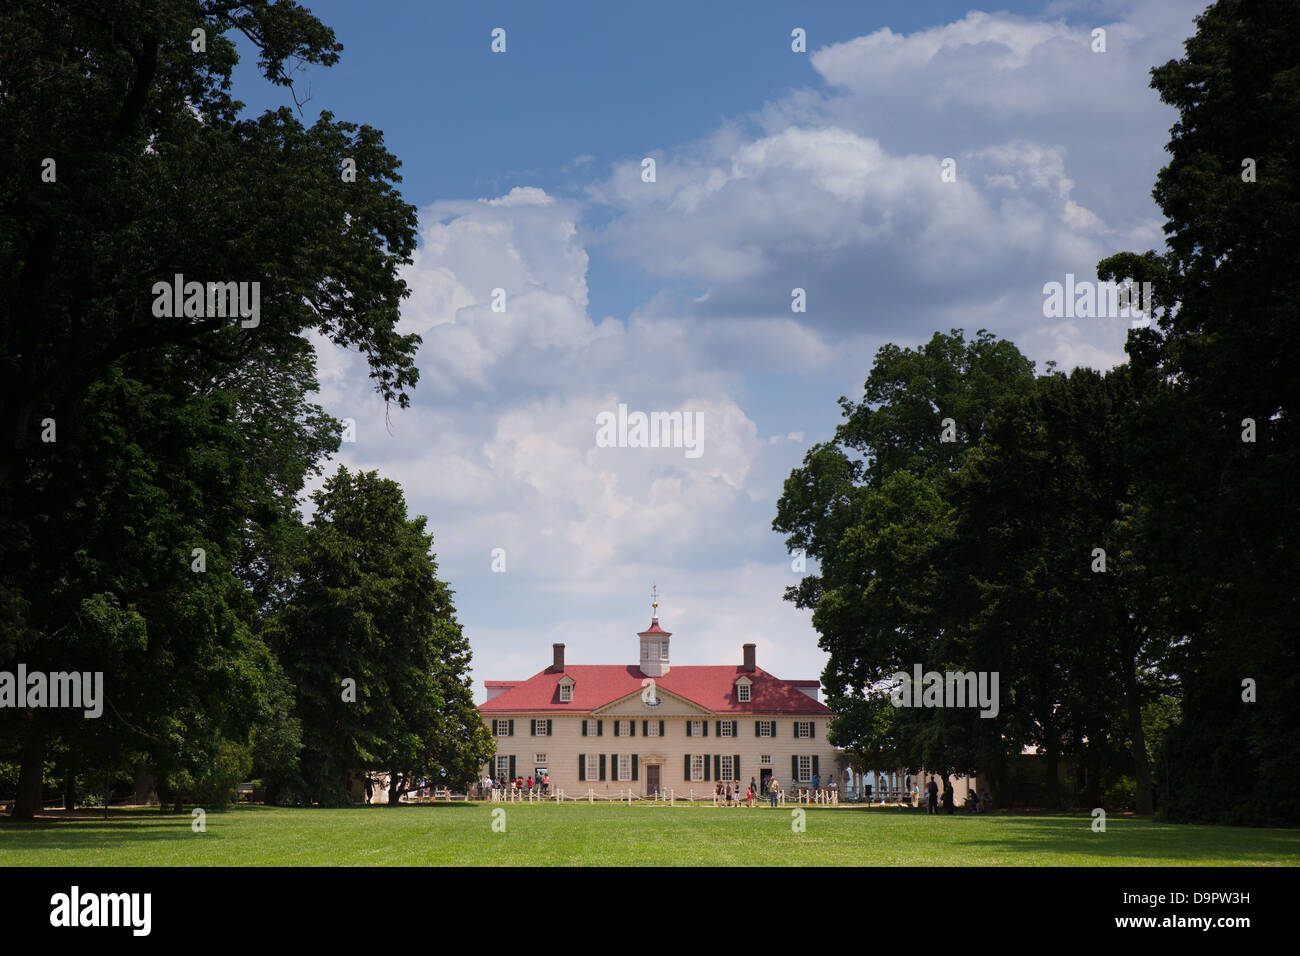 George Washington estate mansion at Mt. Vernon, Virginia, USA Banque D'Images